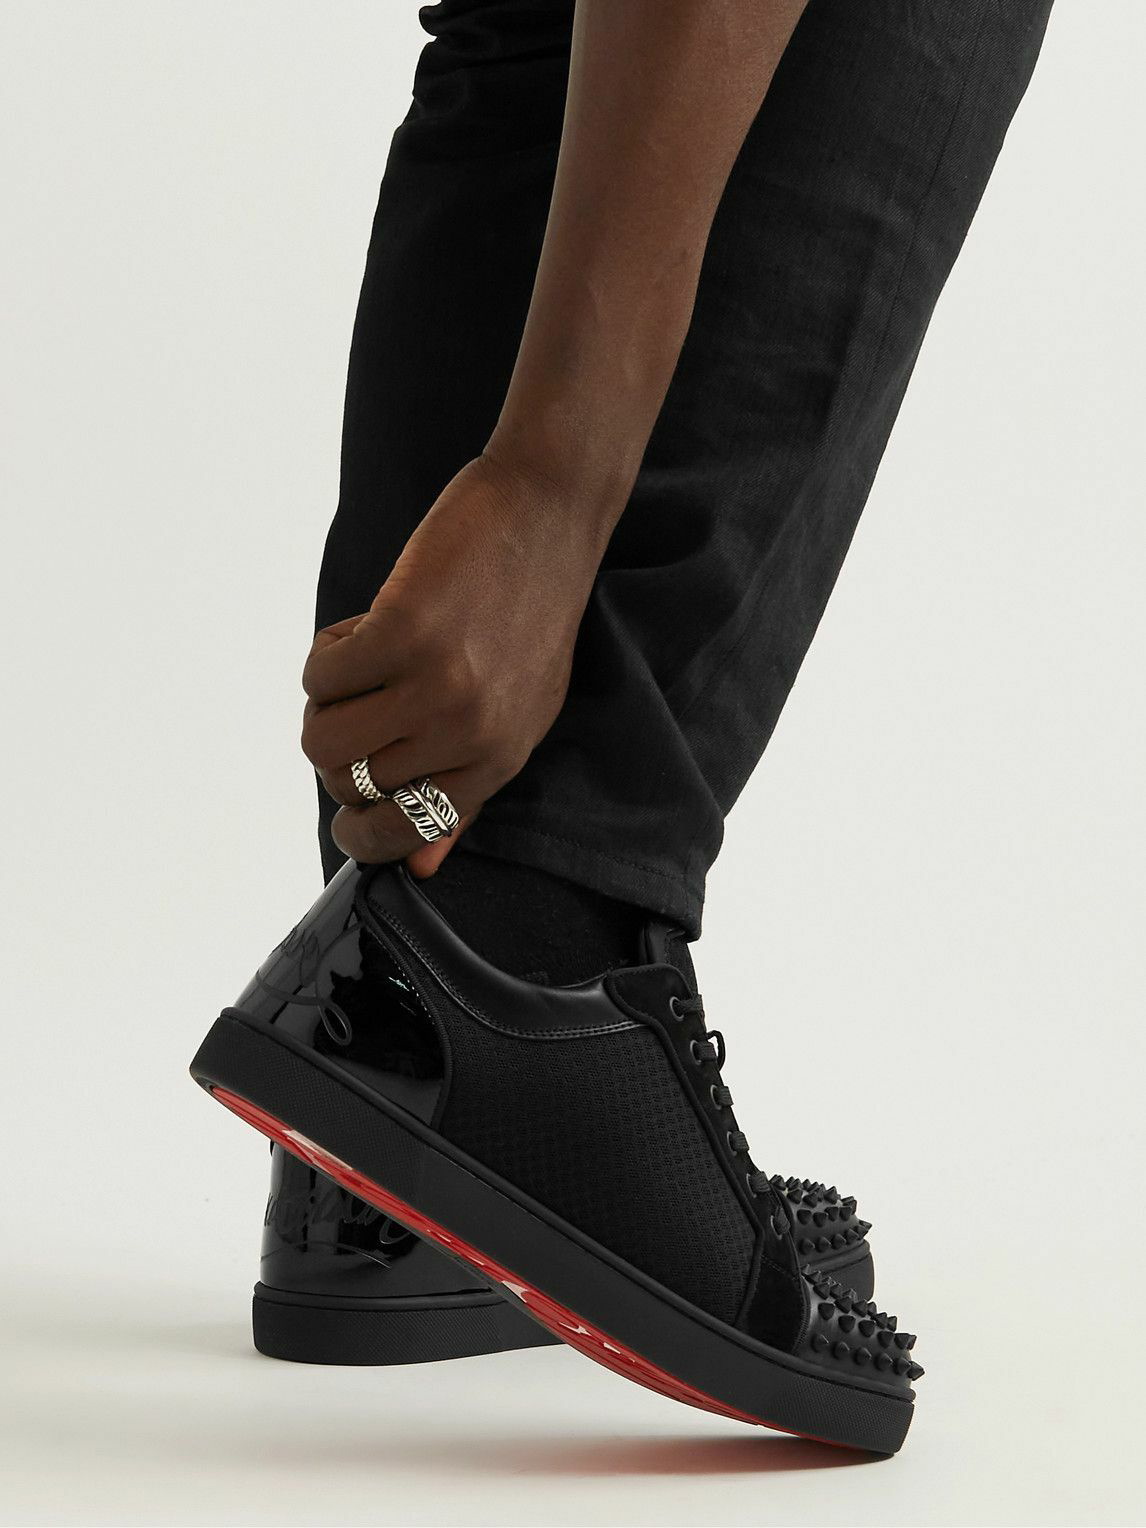 Christian Louboutin Fun Louis Junior Spikes Sneakers in Black for Men